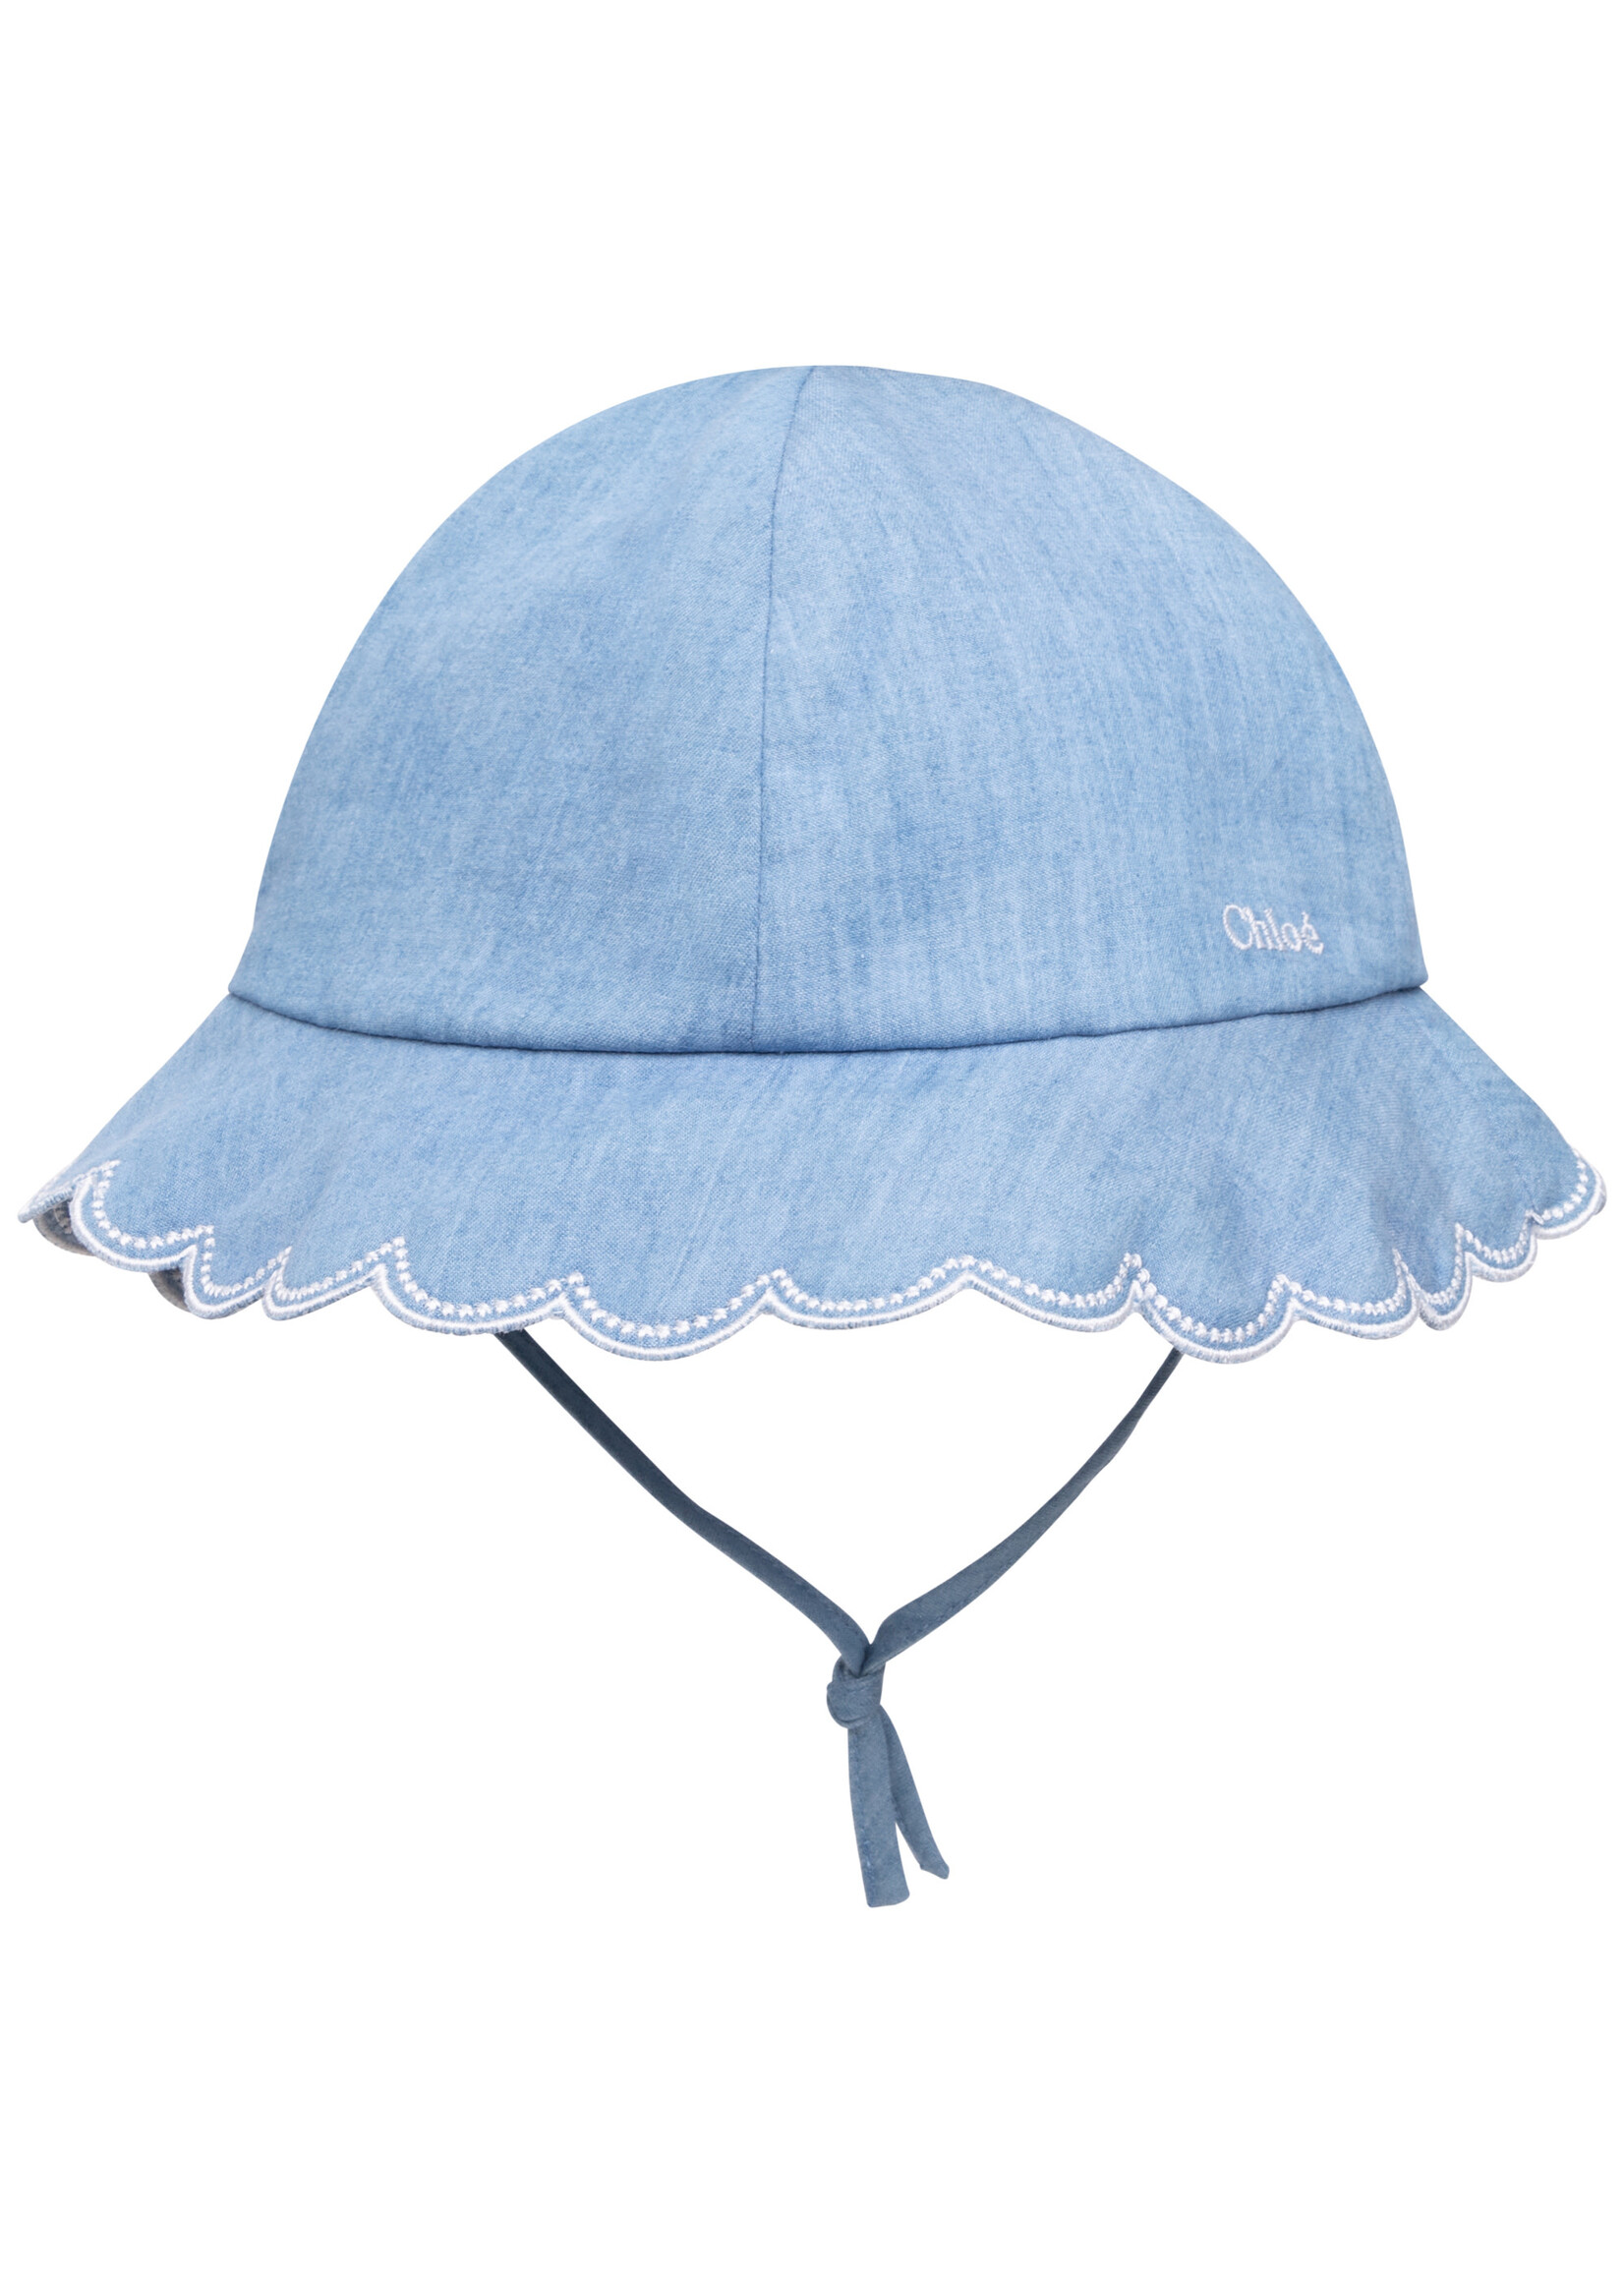 Chloé Chloé Babygirl denim sun hat light blue - C01049